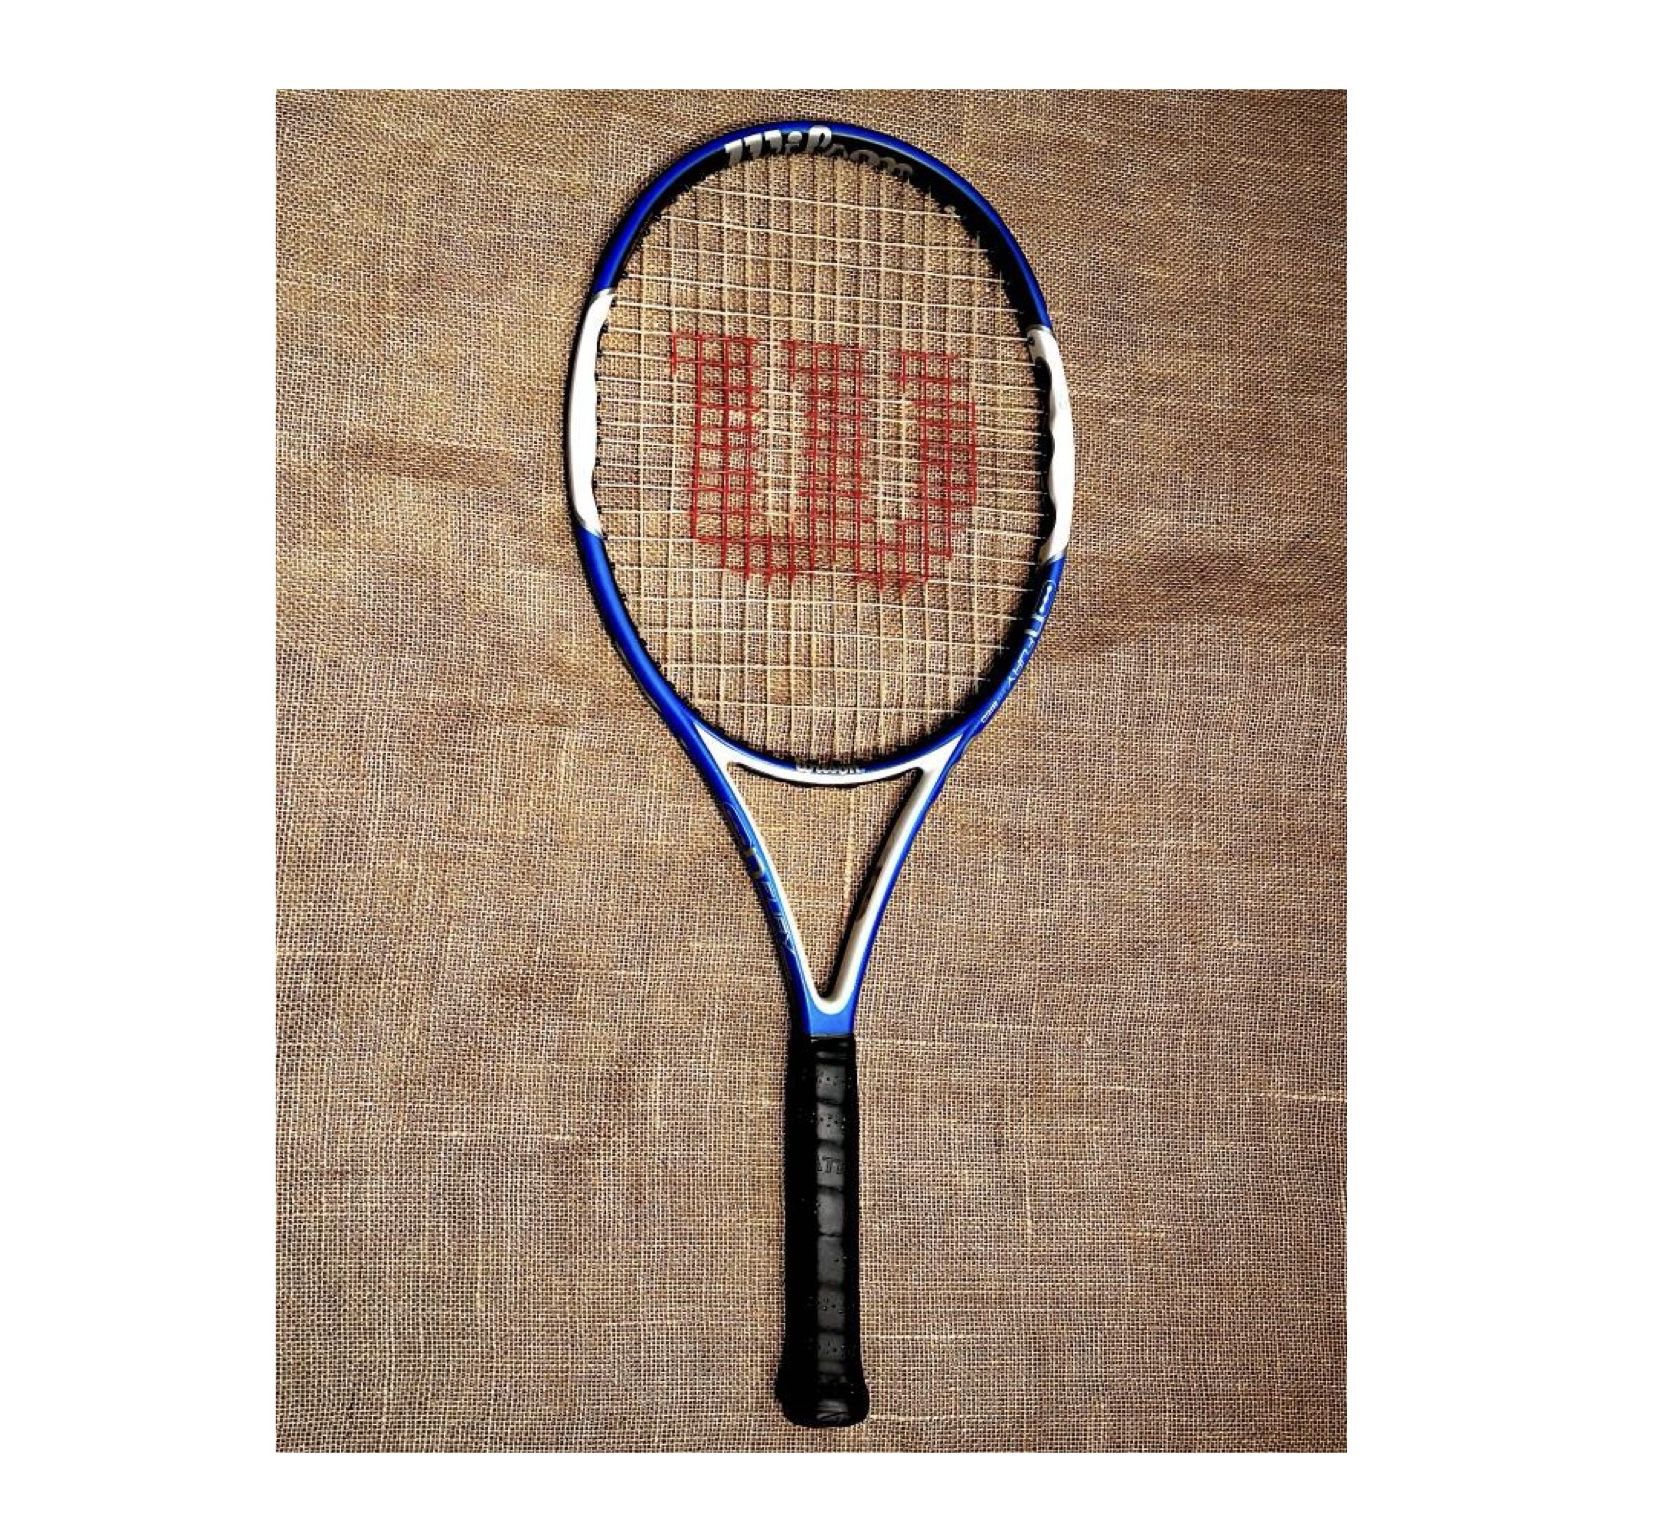 Wilson NFury Hybrid Tennis Racket